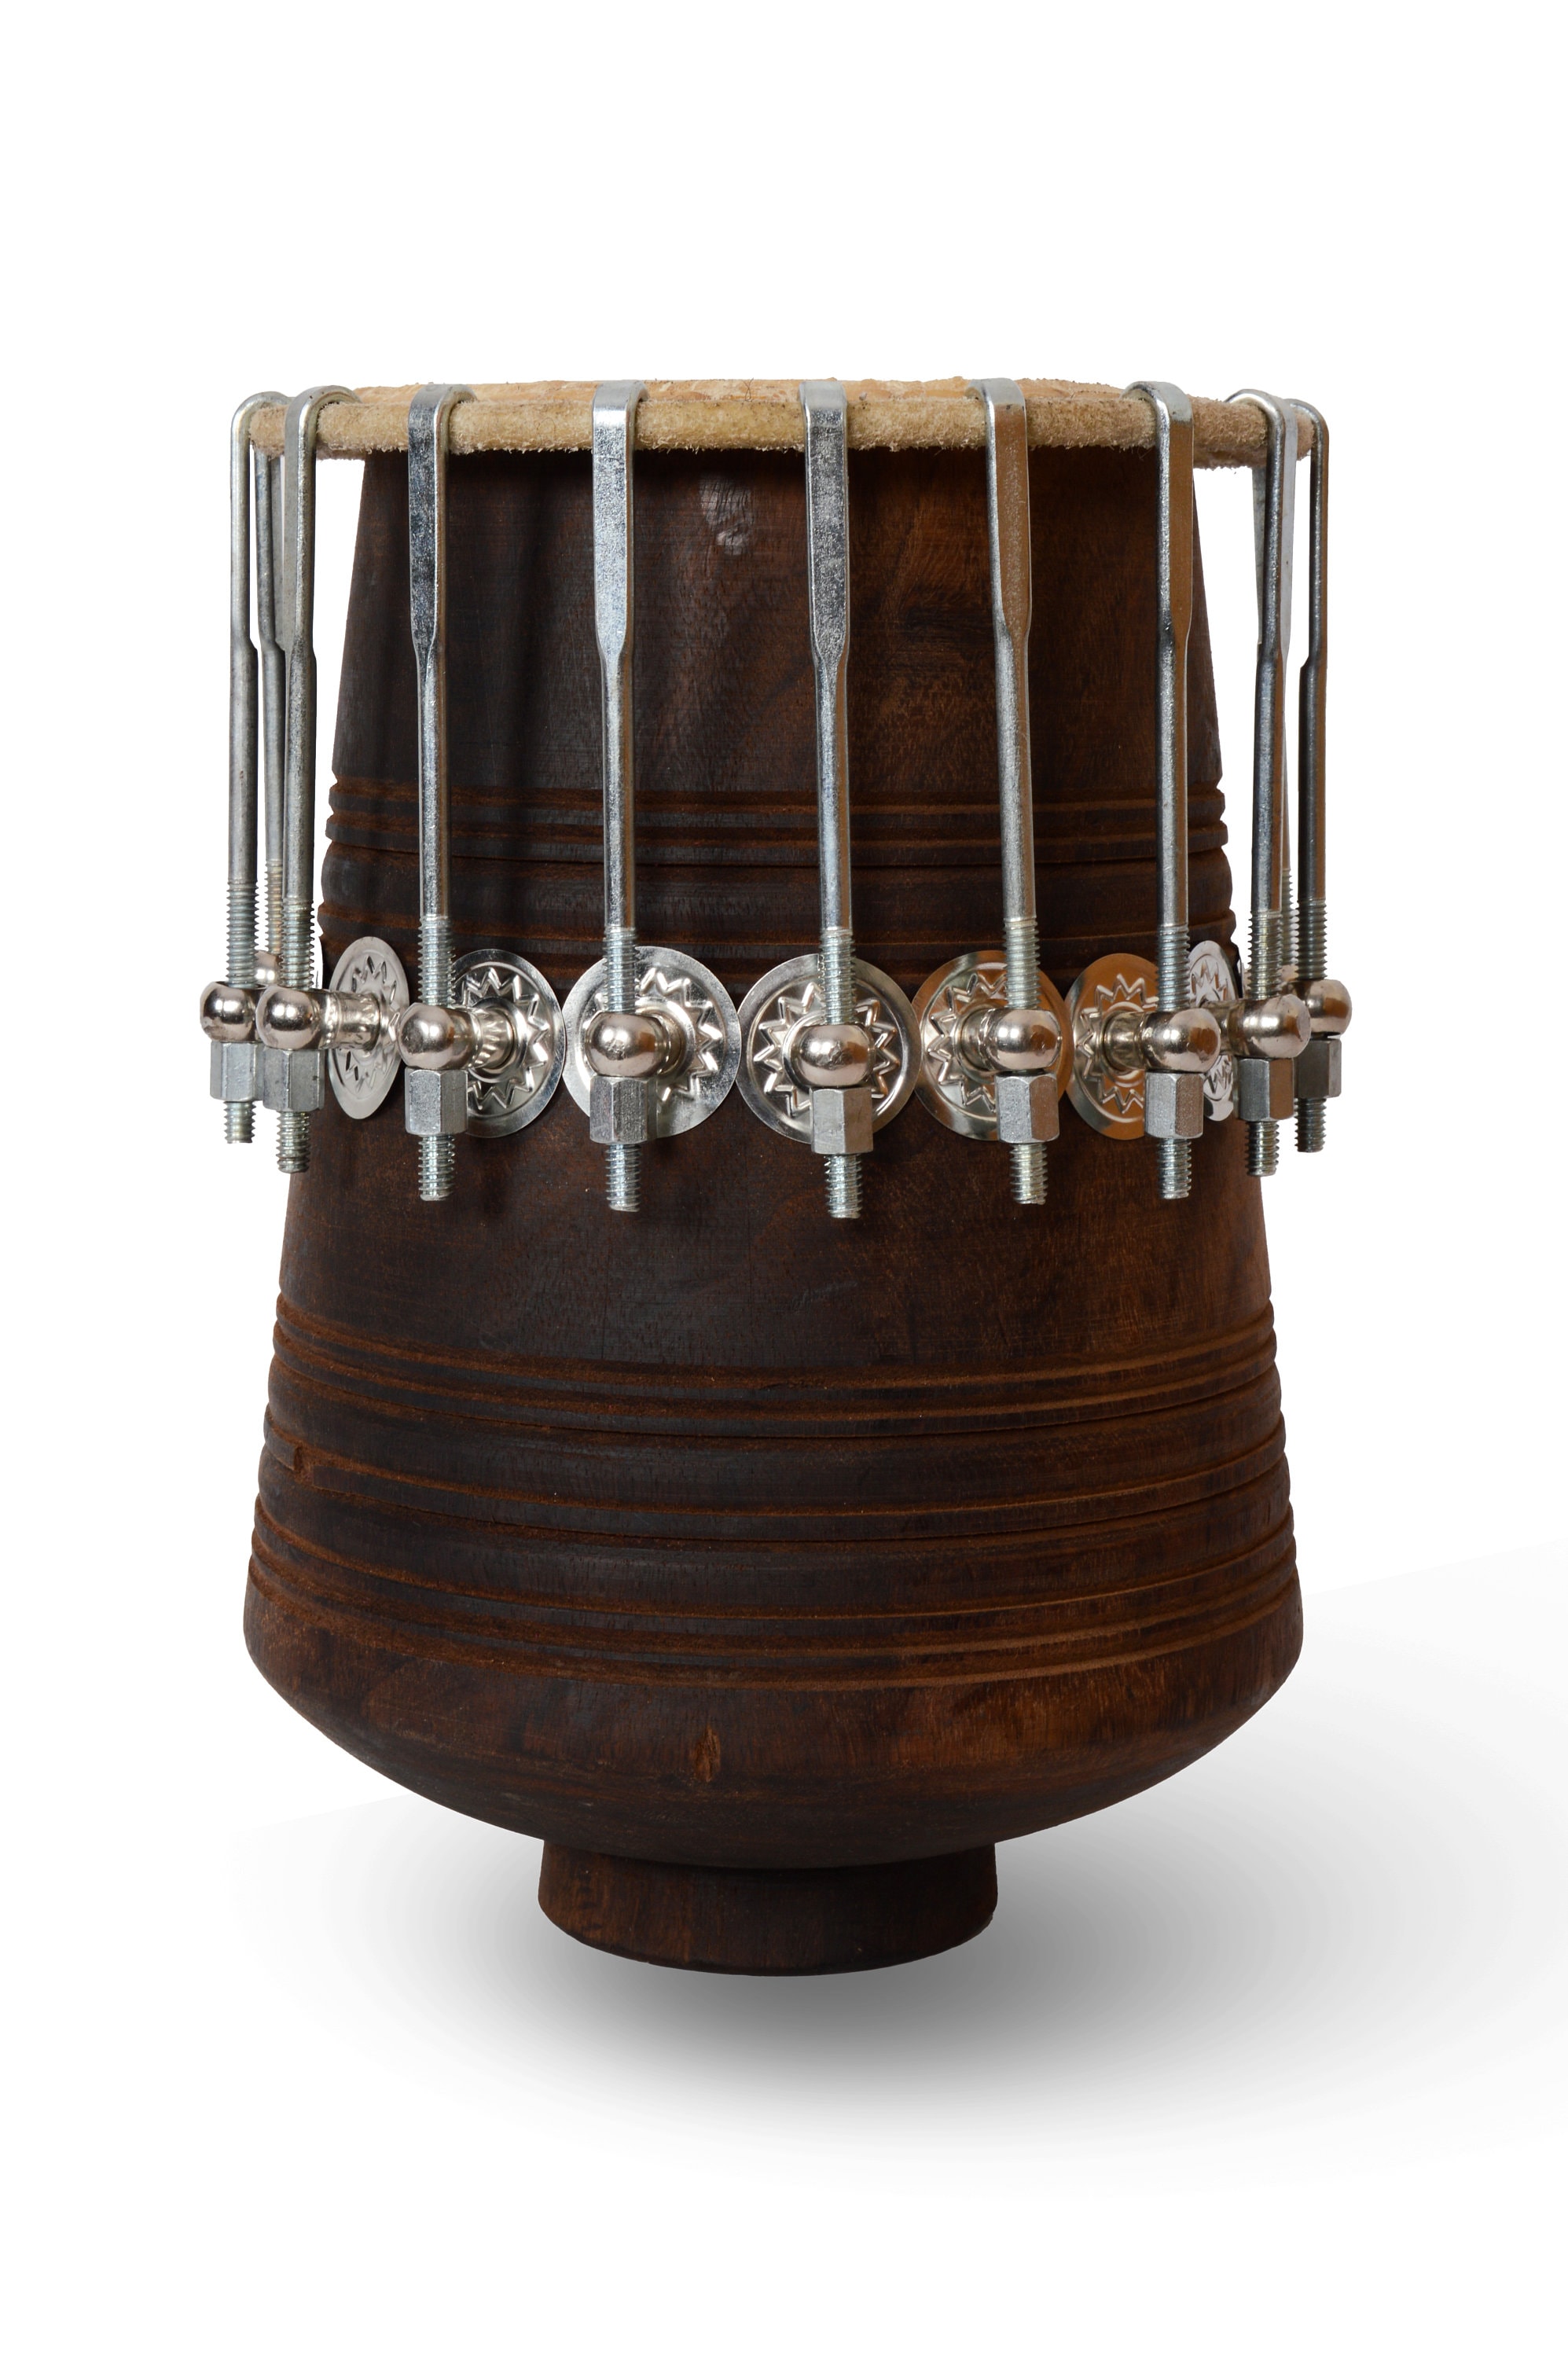 Hang drum. Traditional folk handpan musical instrument. Ethnic